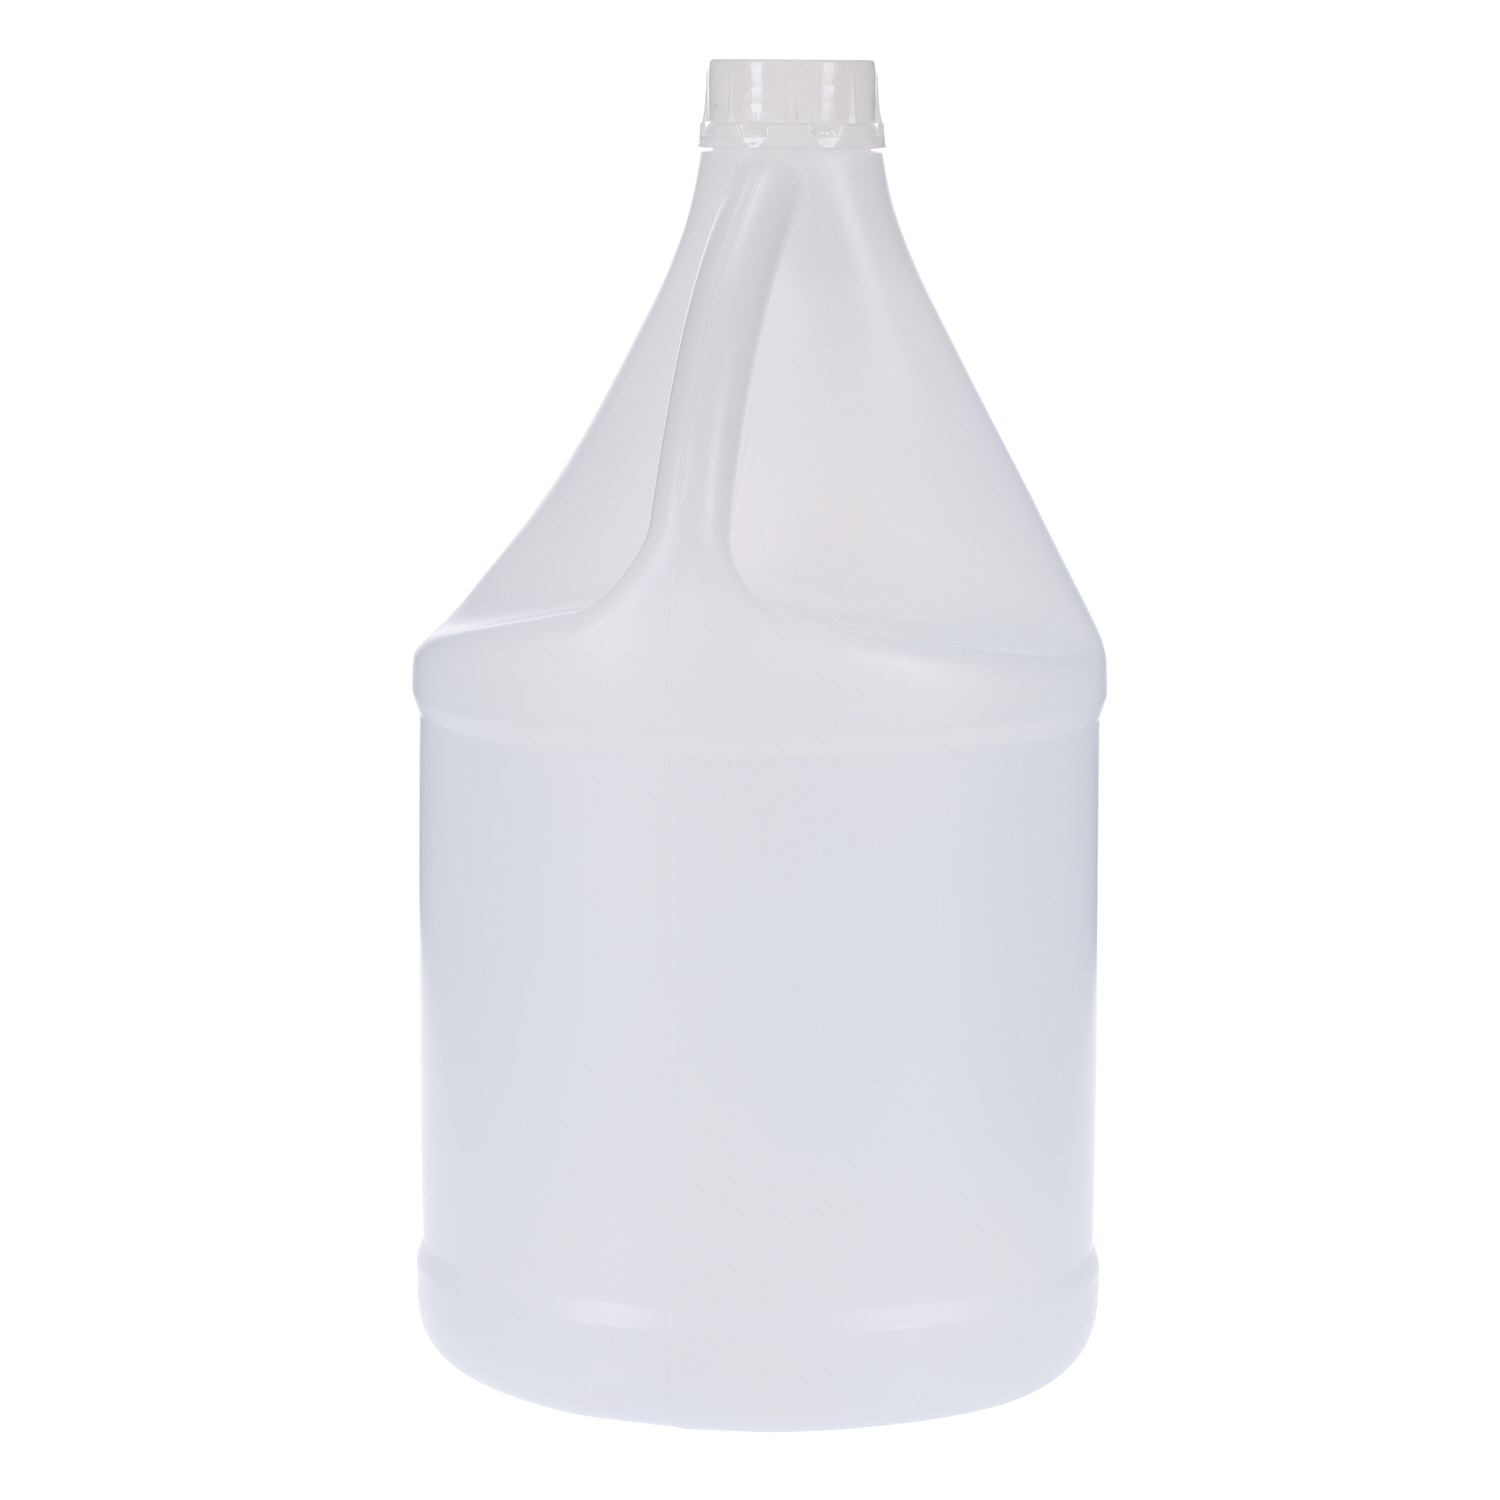 American Classic White Vinegar In Bottle 1 Gallon